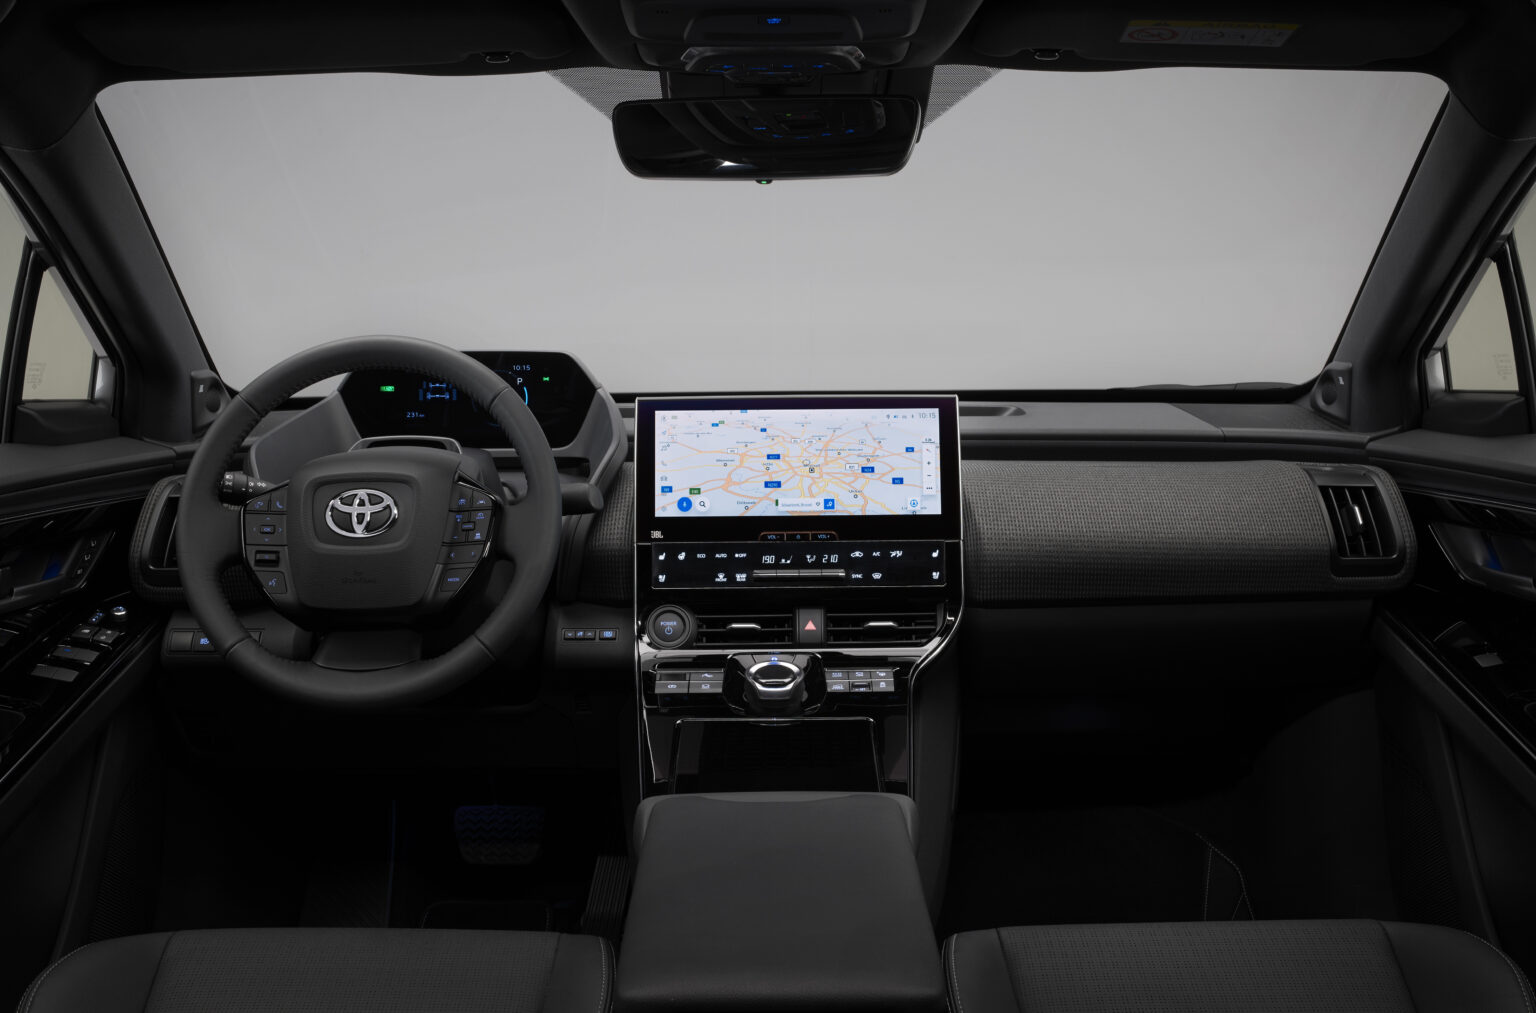 2023 Toyota bZ4x Interior Image 2